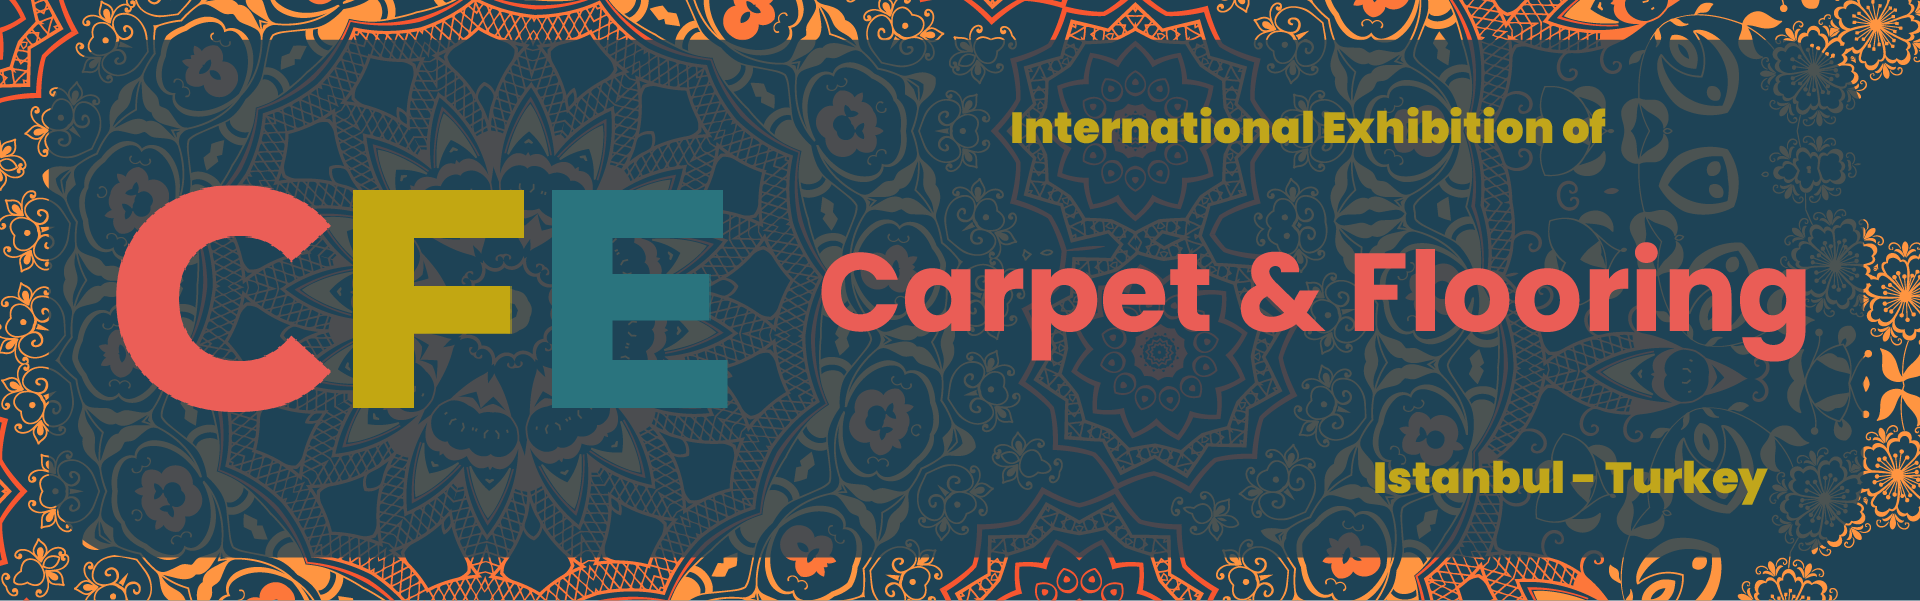 Carpet and Flooring Exhibition Turkey Istanbul